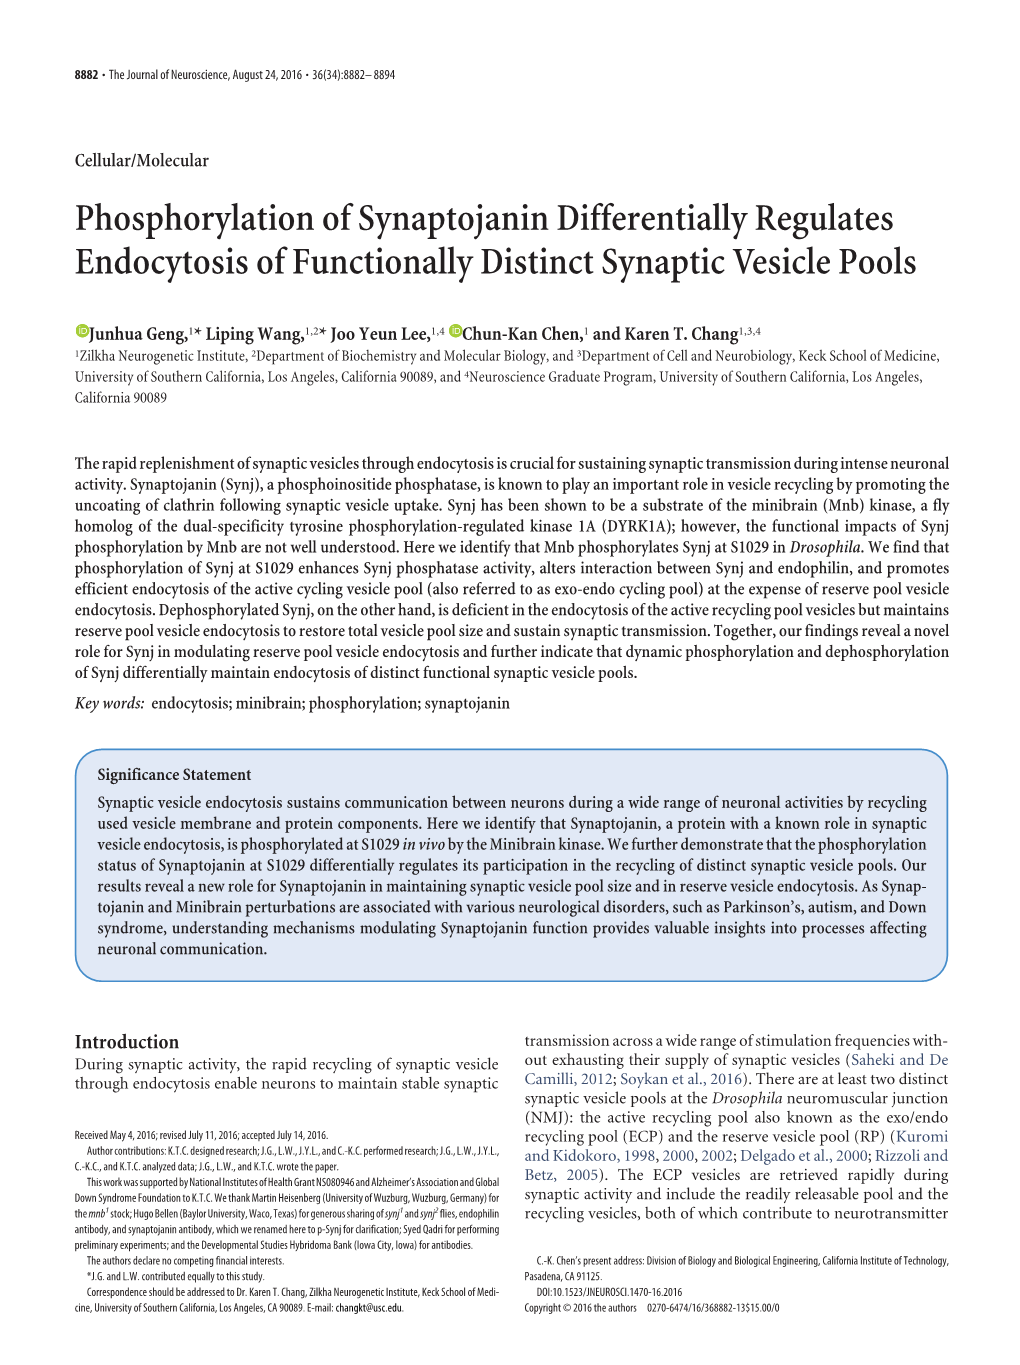 Phosphorylation of Synaptojanin Differentially Regulates Endocytosis of Functionally Distinct Synaptic Vesicle Pools